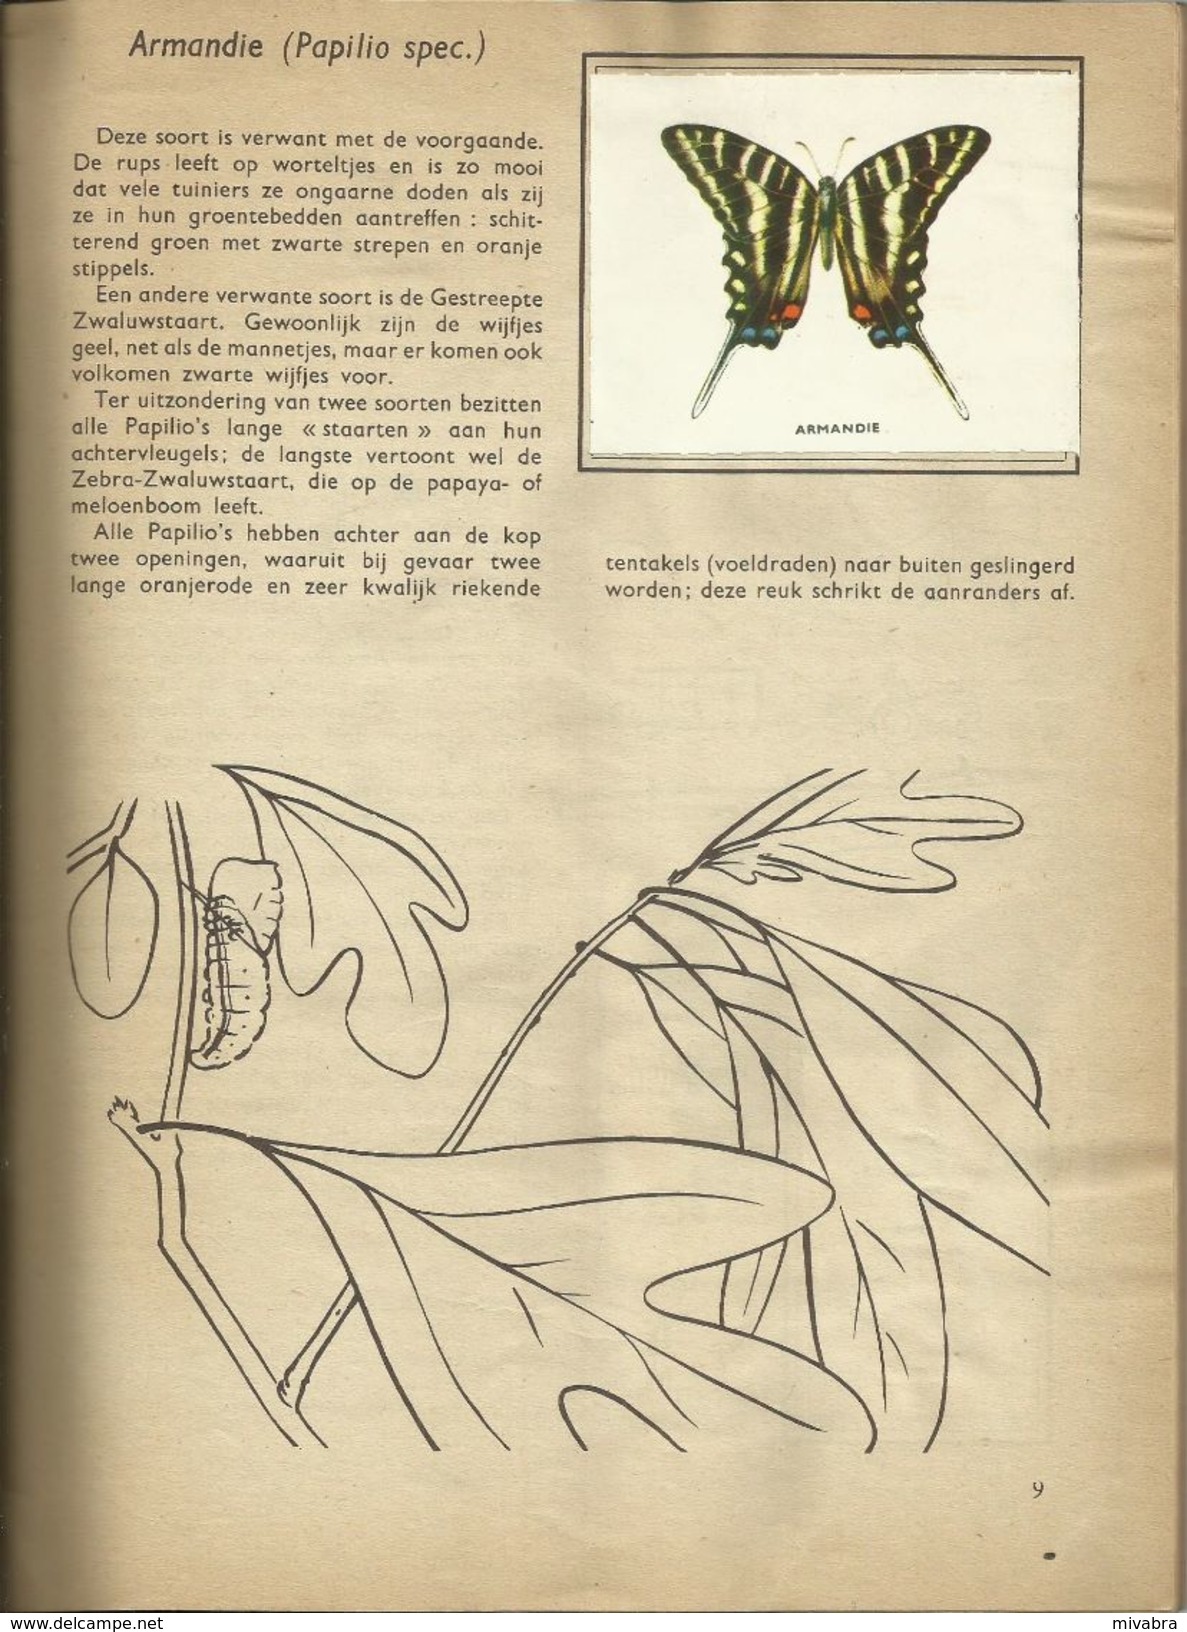 ENCYCLOPEDIE IN ZEGELS N° 10 - DE INSEKTEN ( VLINDERS BUTTERFLIES PAPILLON - KEVERS COLEOPTERA BEETLES ) 1957 - Encyclopedia